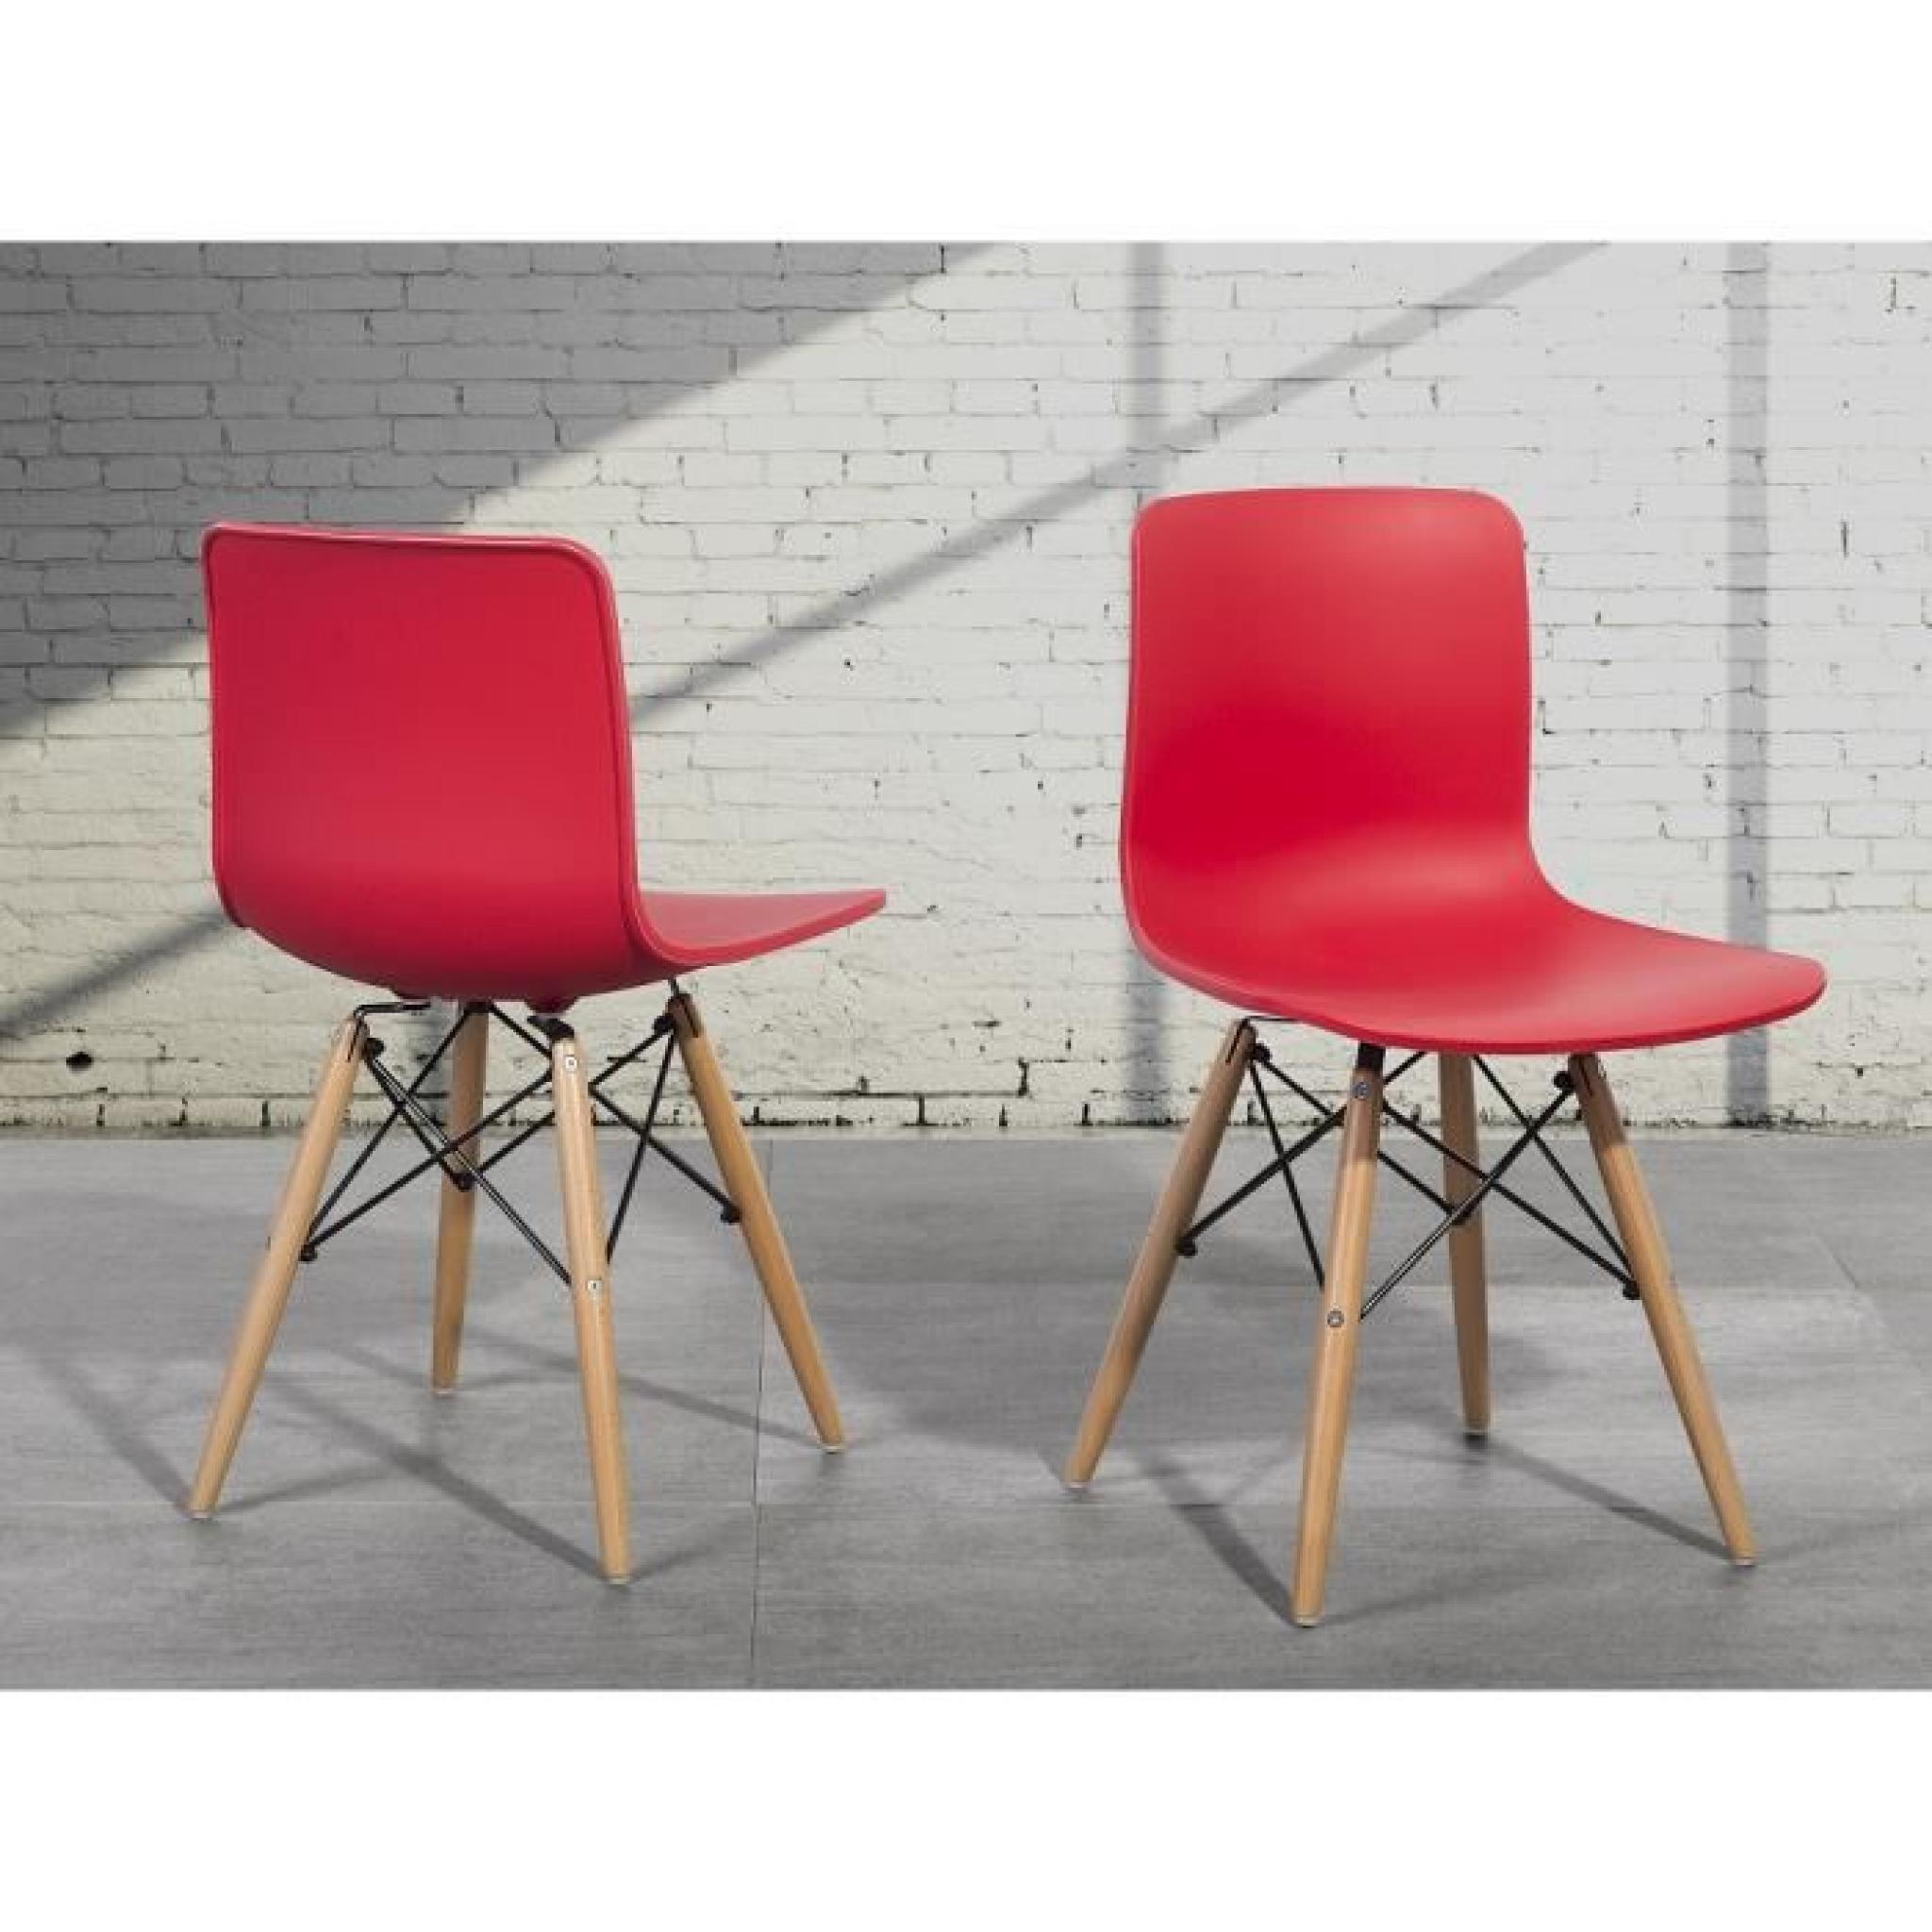 Chaise design - siège en plastique rouge - Soho